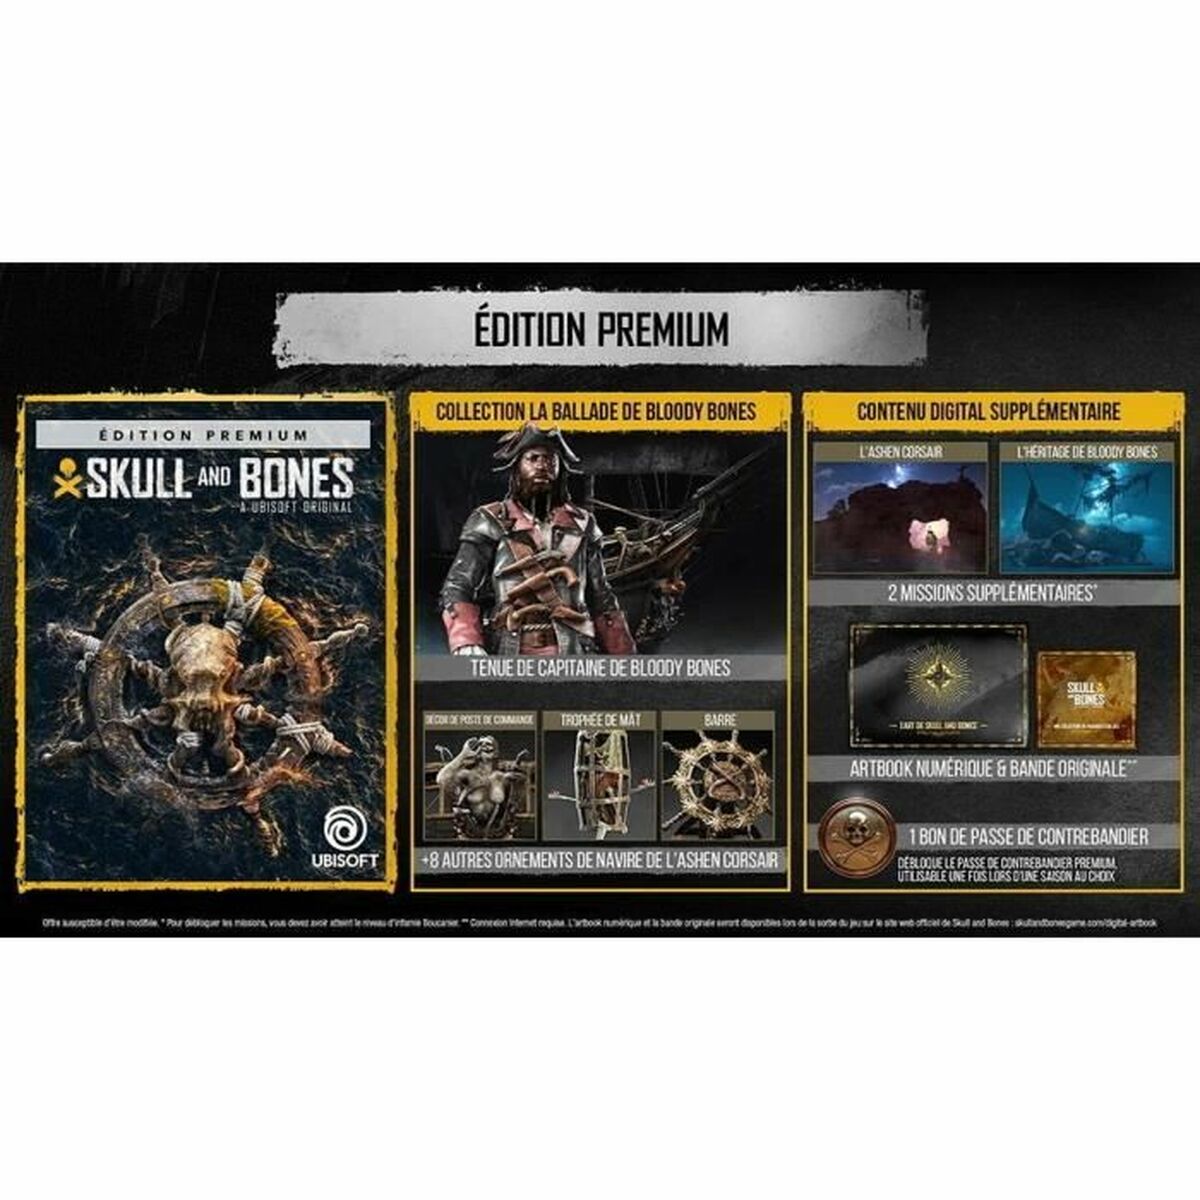 Videospēle Xbox Series X Ubisoft Skull and Bones - Premium Edition